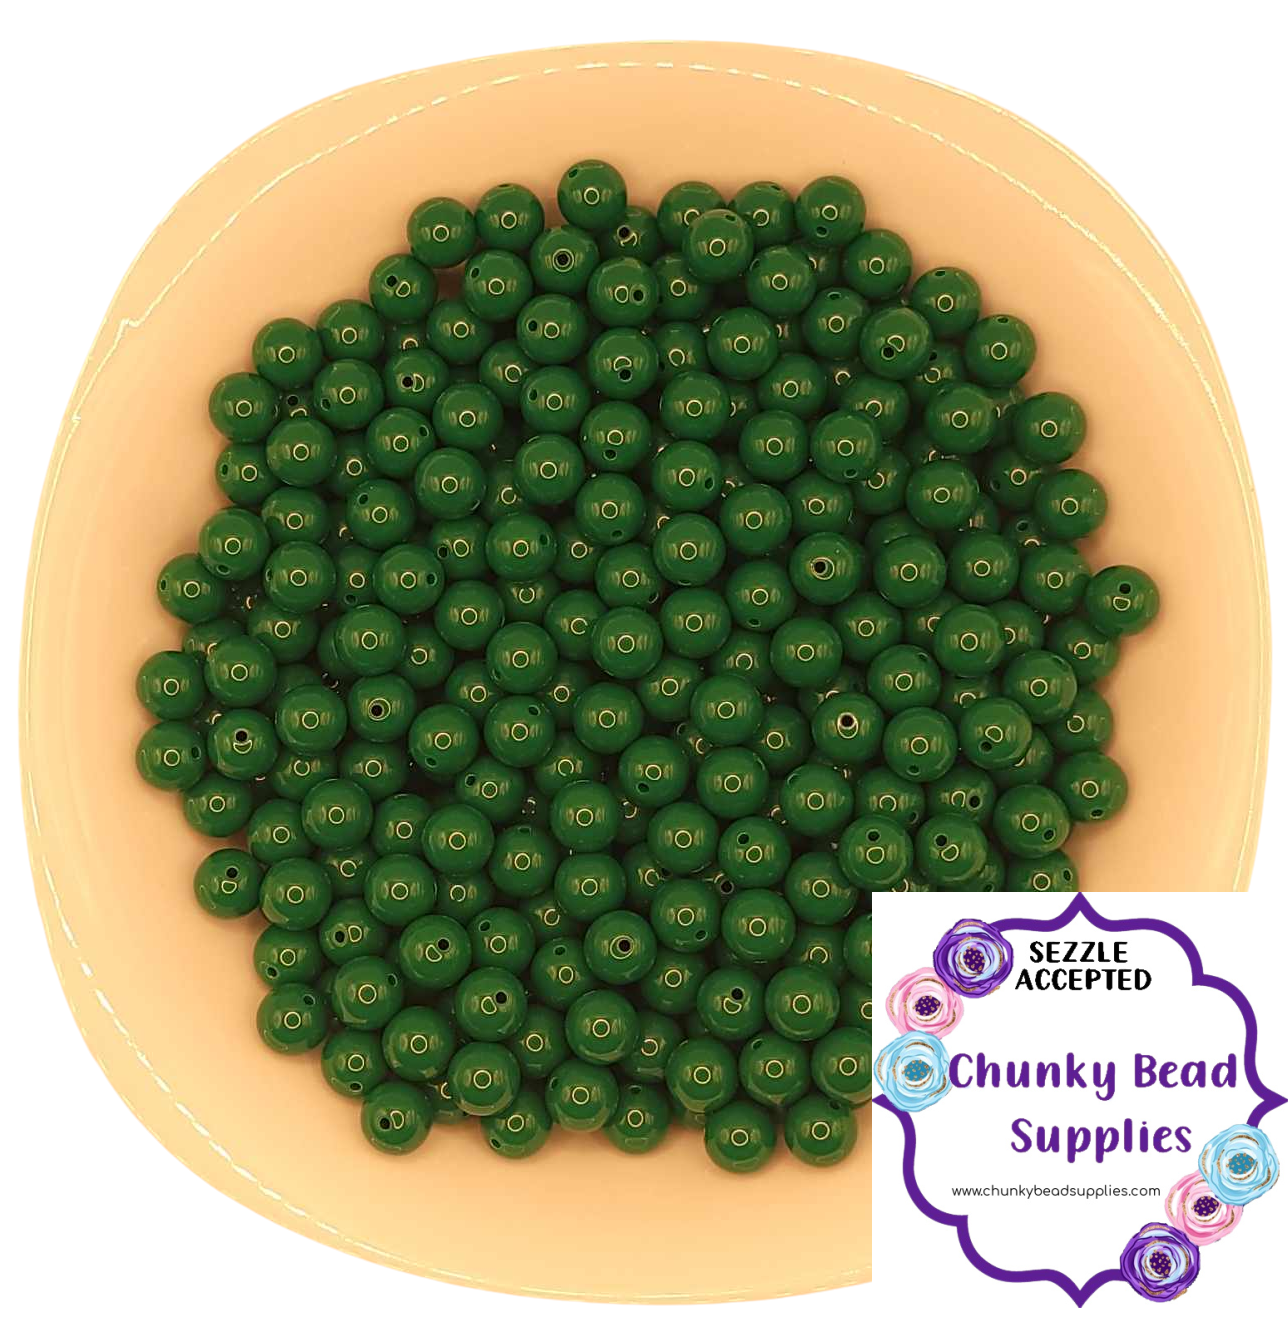 12mm “Regular Green” Solid Acrylic Beads, CBS Chunky Bead Supplies, Gumball Beads, Chunky Bubblegum Beads